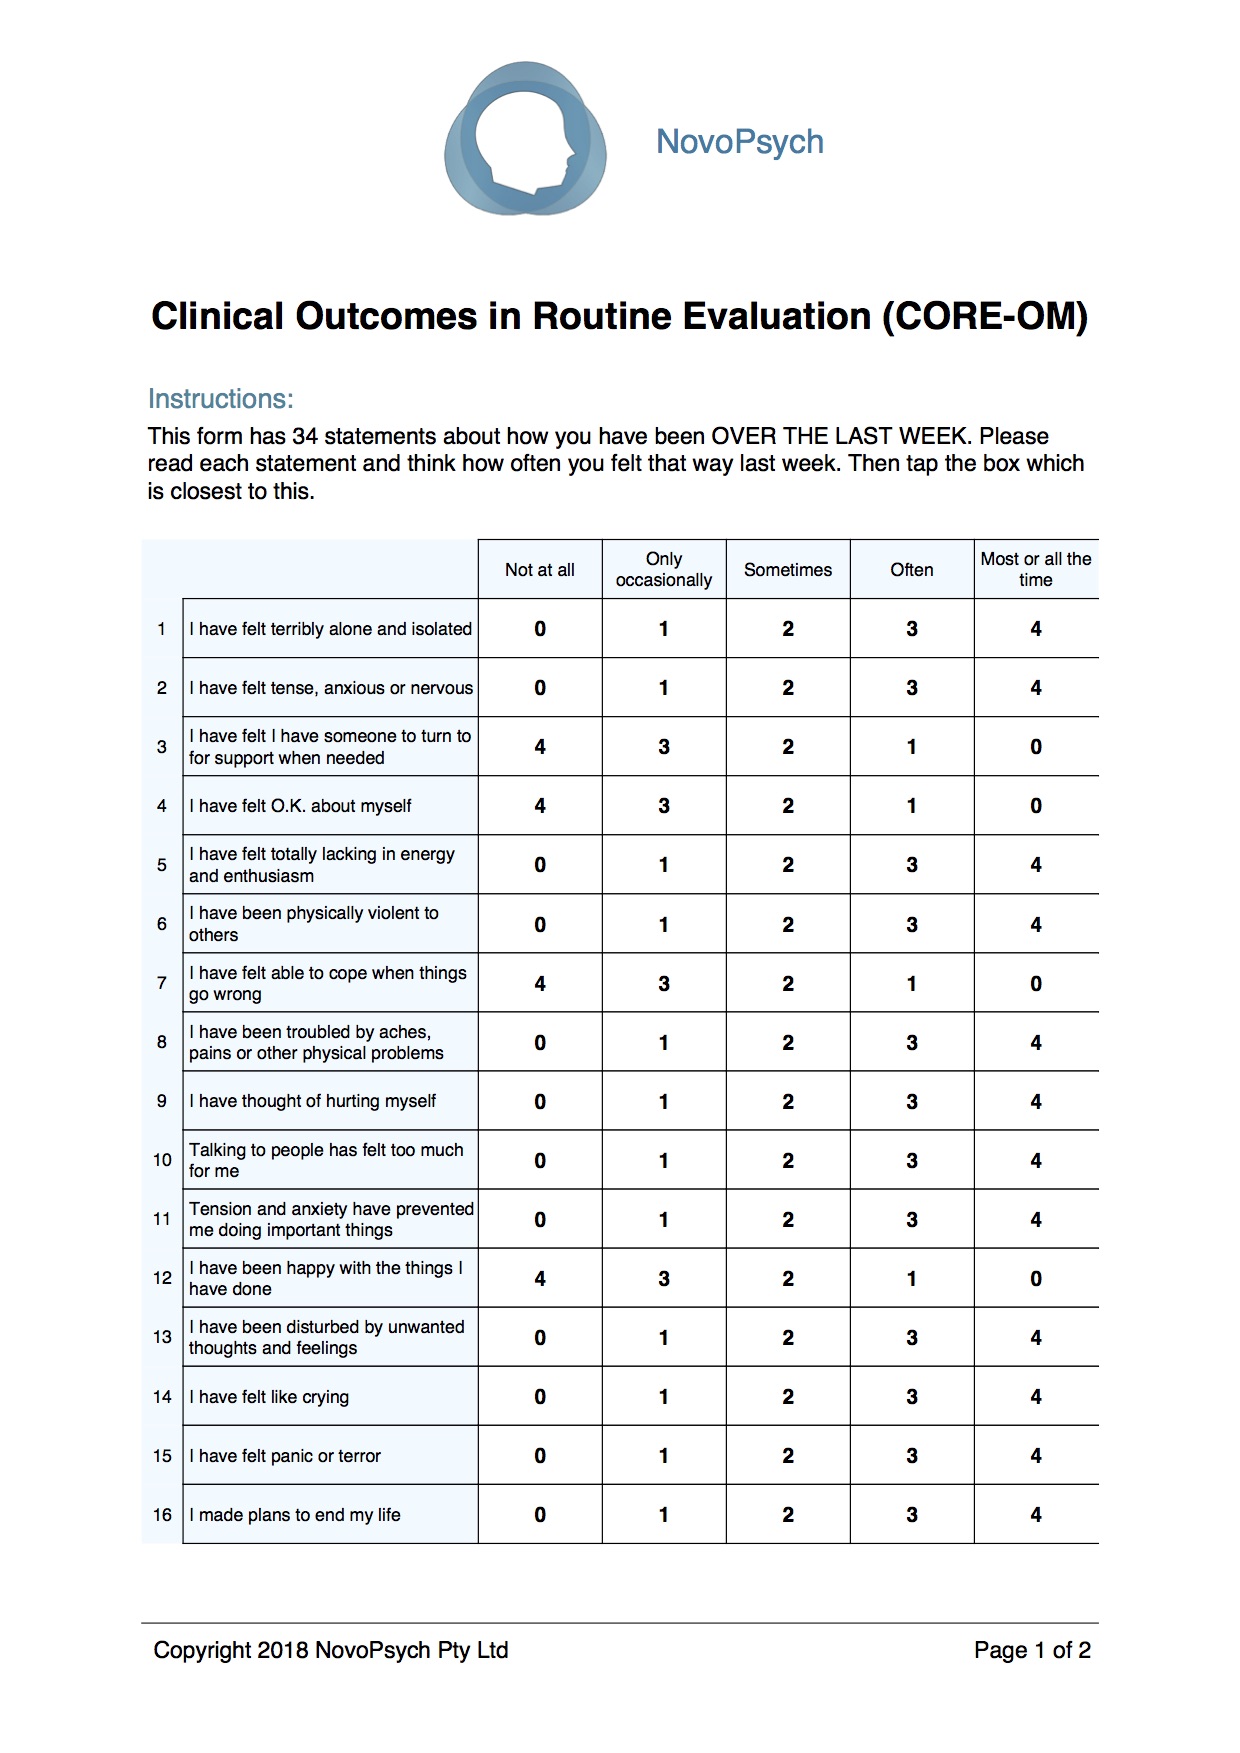 Comparison of CORE-OM clinical scores